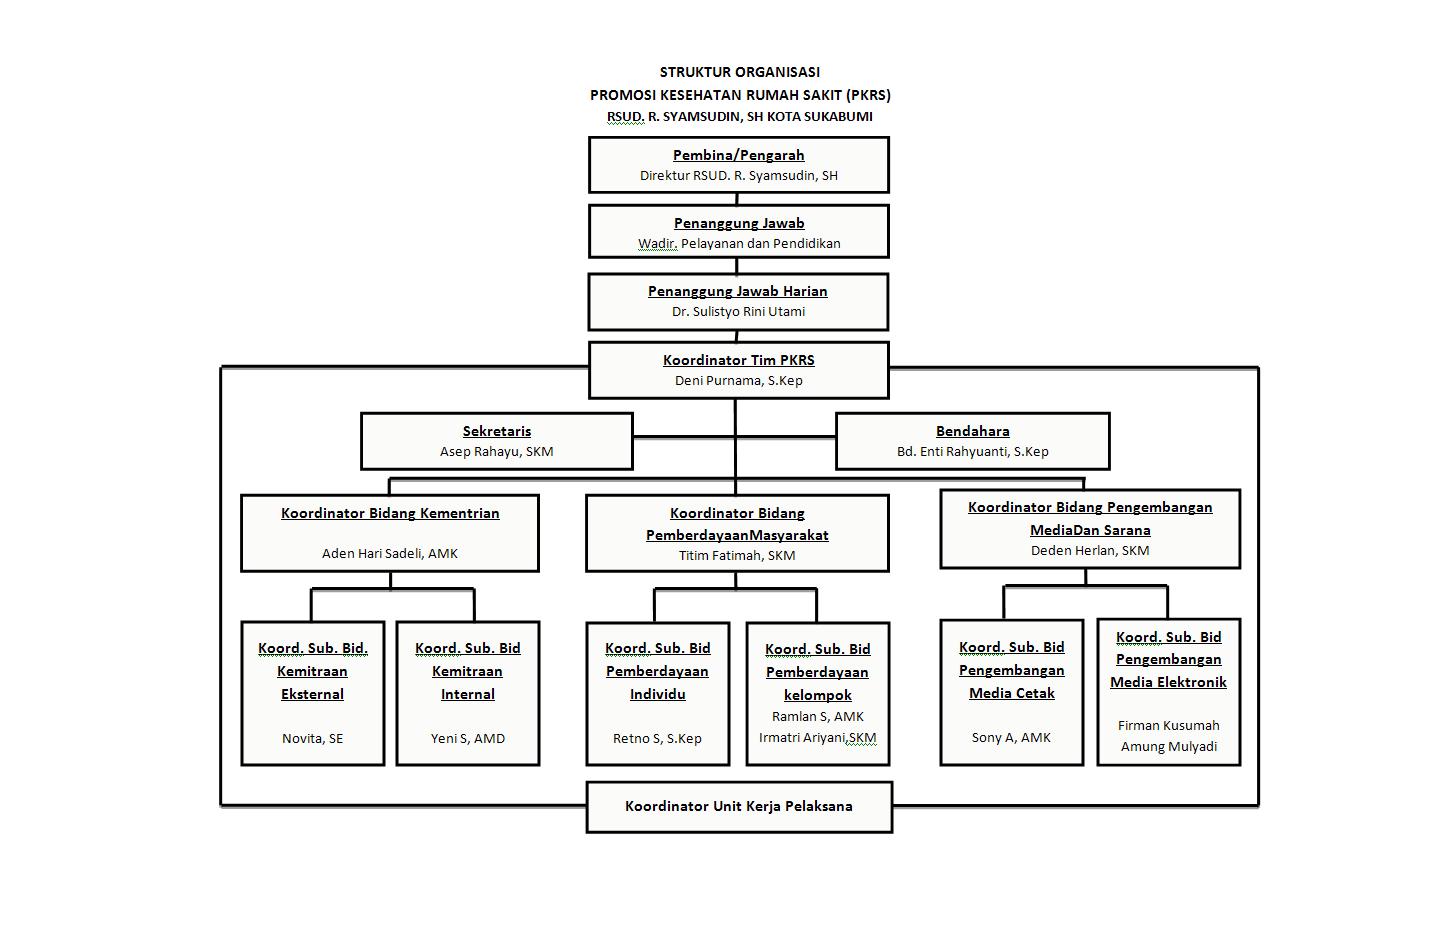 Promosi Kesehatan Rumah Sakit: Struktur organisasi PKRS